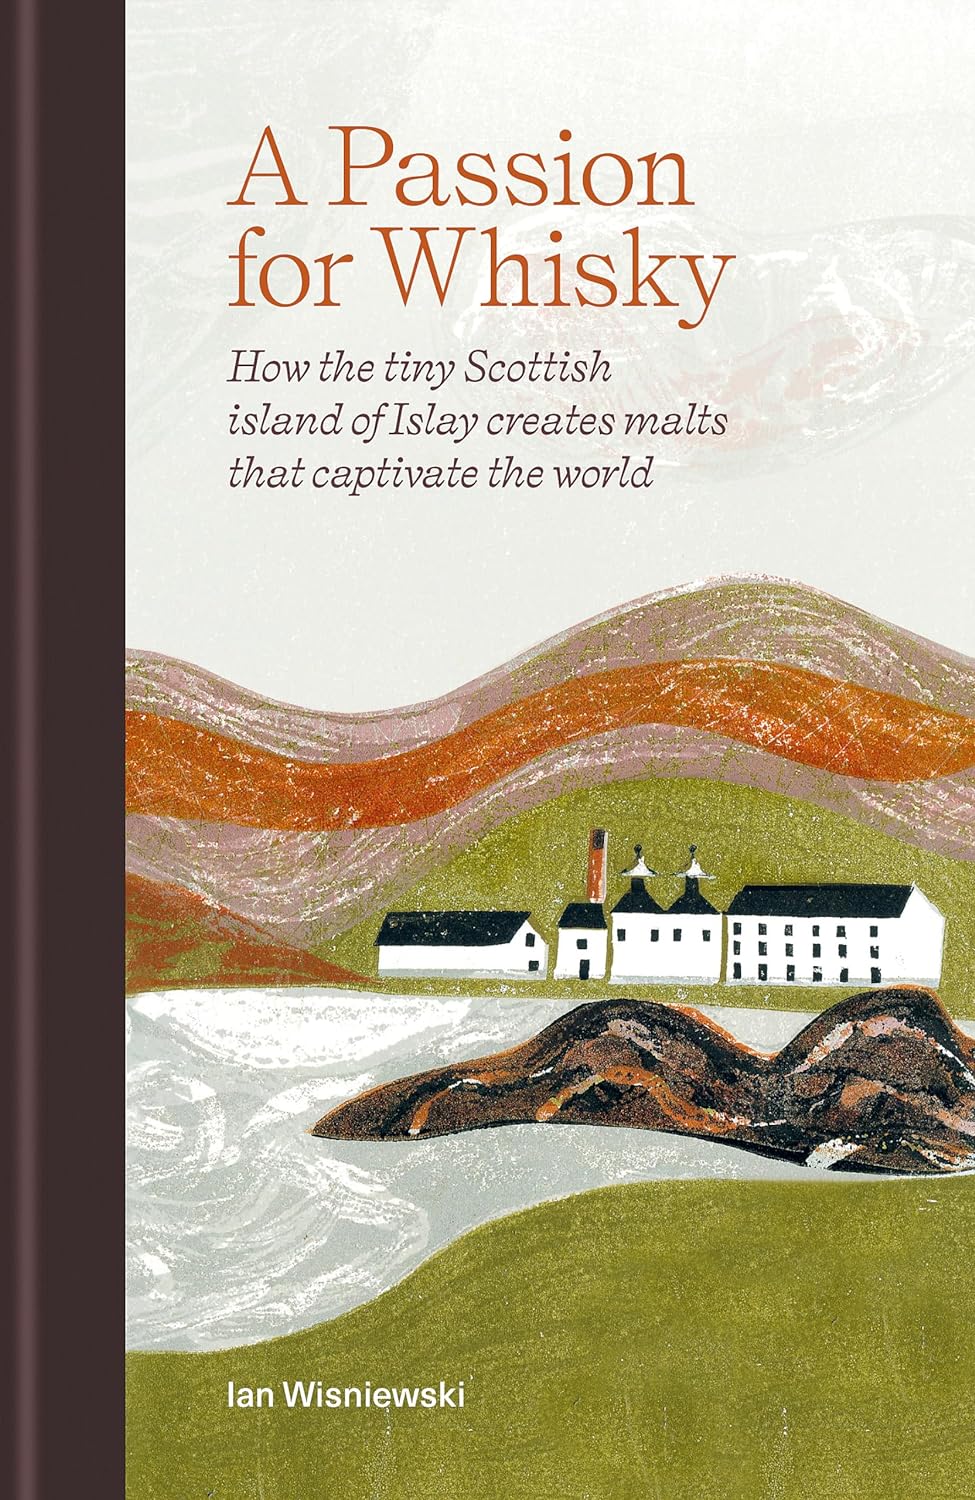 A Passion for Whisky: How the tiny Scottish island of Islay creates malts that captivate the world (Ian Wisniewski)